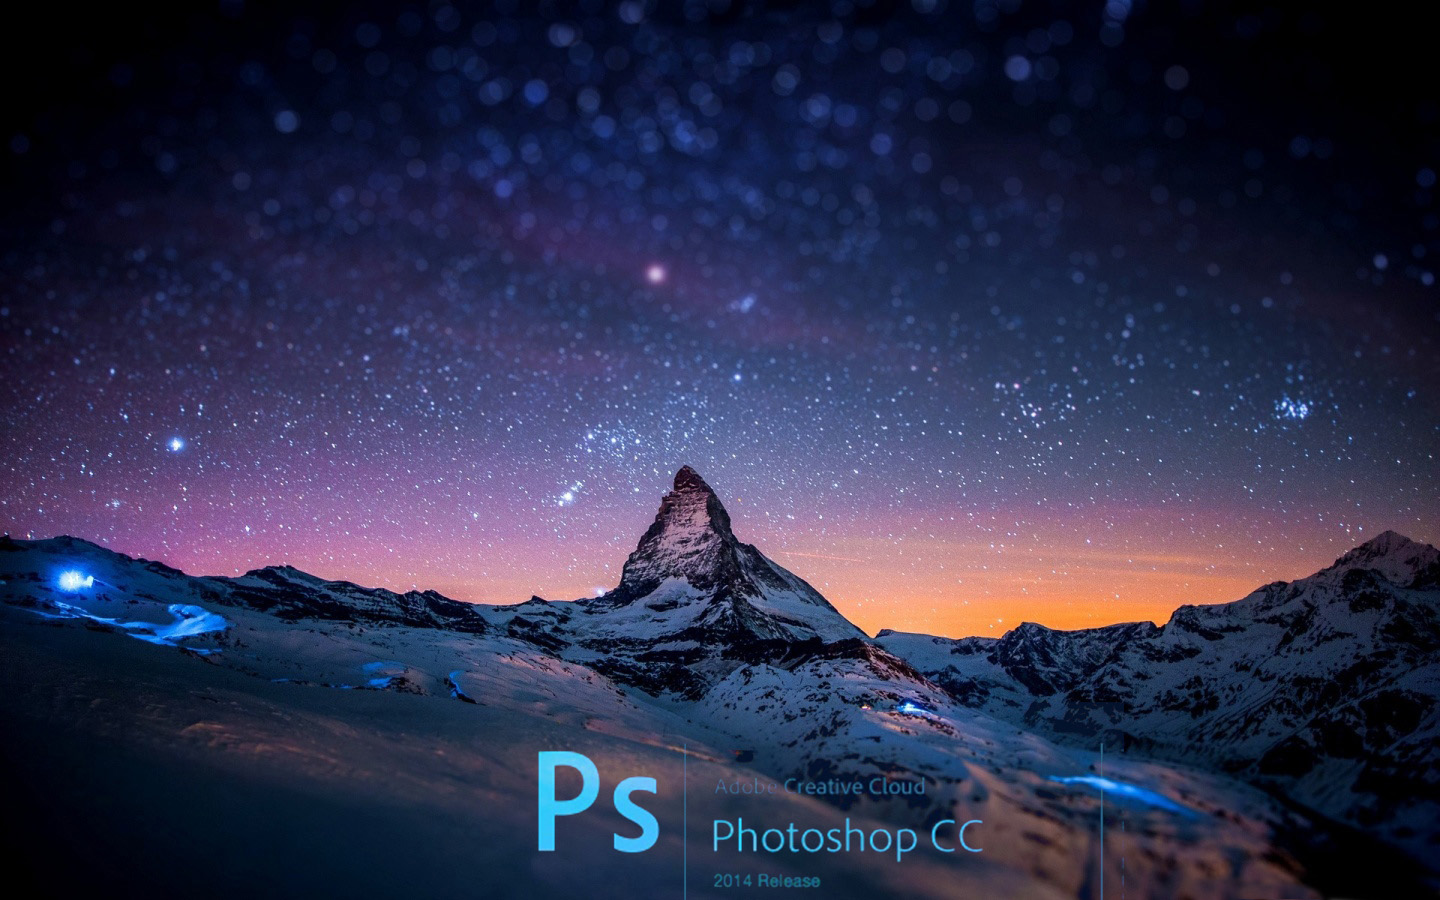 Adobe photoshop cc 2015 v16.1.2 for mac os